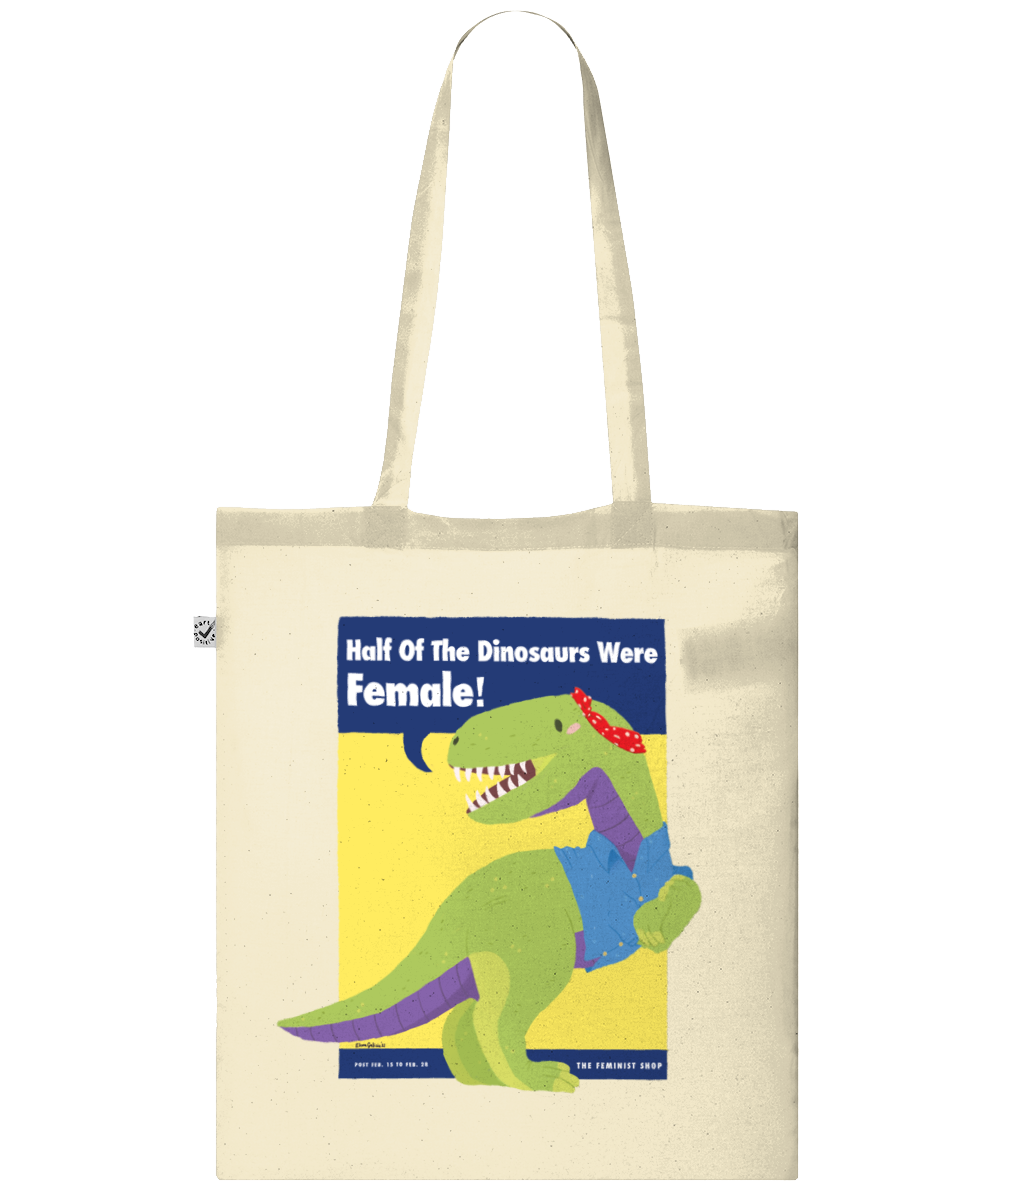 Feminist Tote Bag - Half of the Dinosaurs were Female!